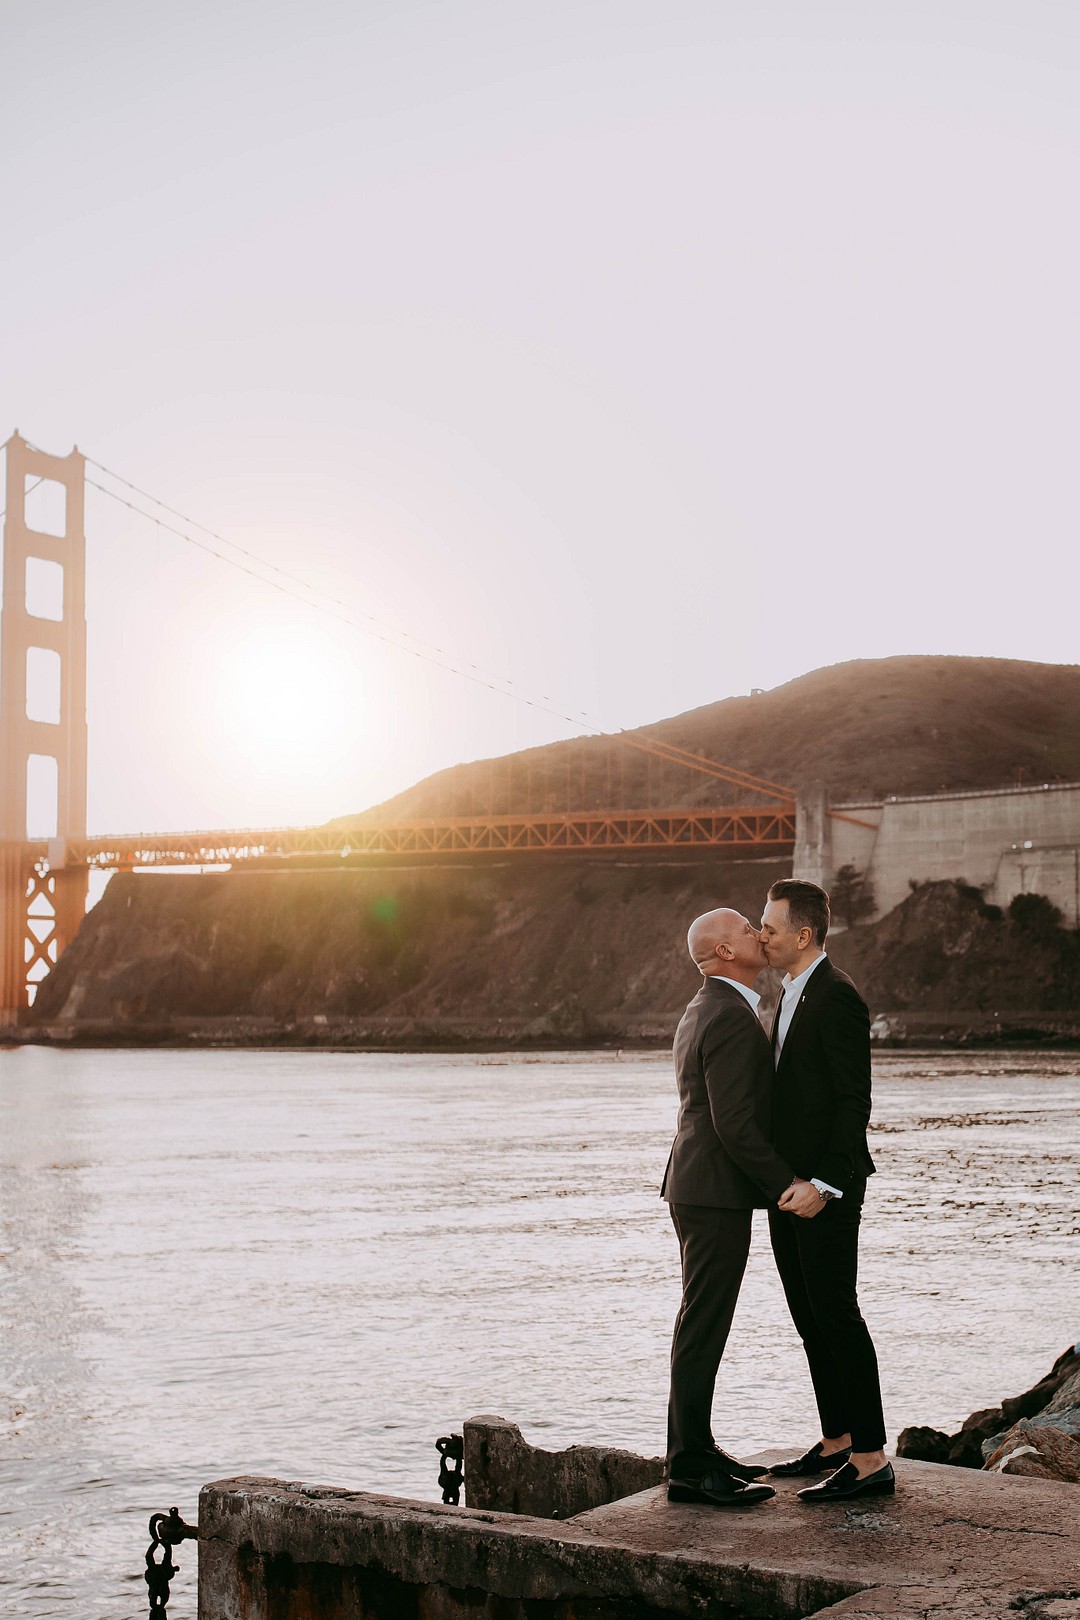 Beach anniversary photos in San Francisco, California LGBTQ+ weddings photo shoot two grooms Golden Gate